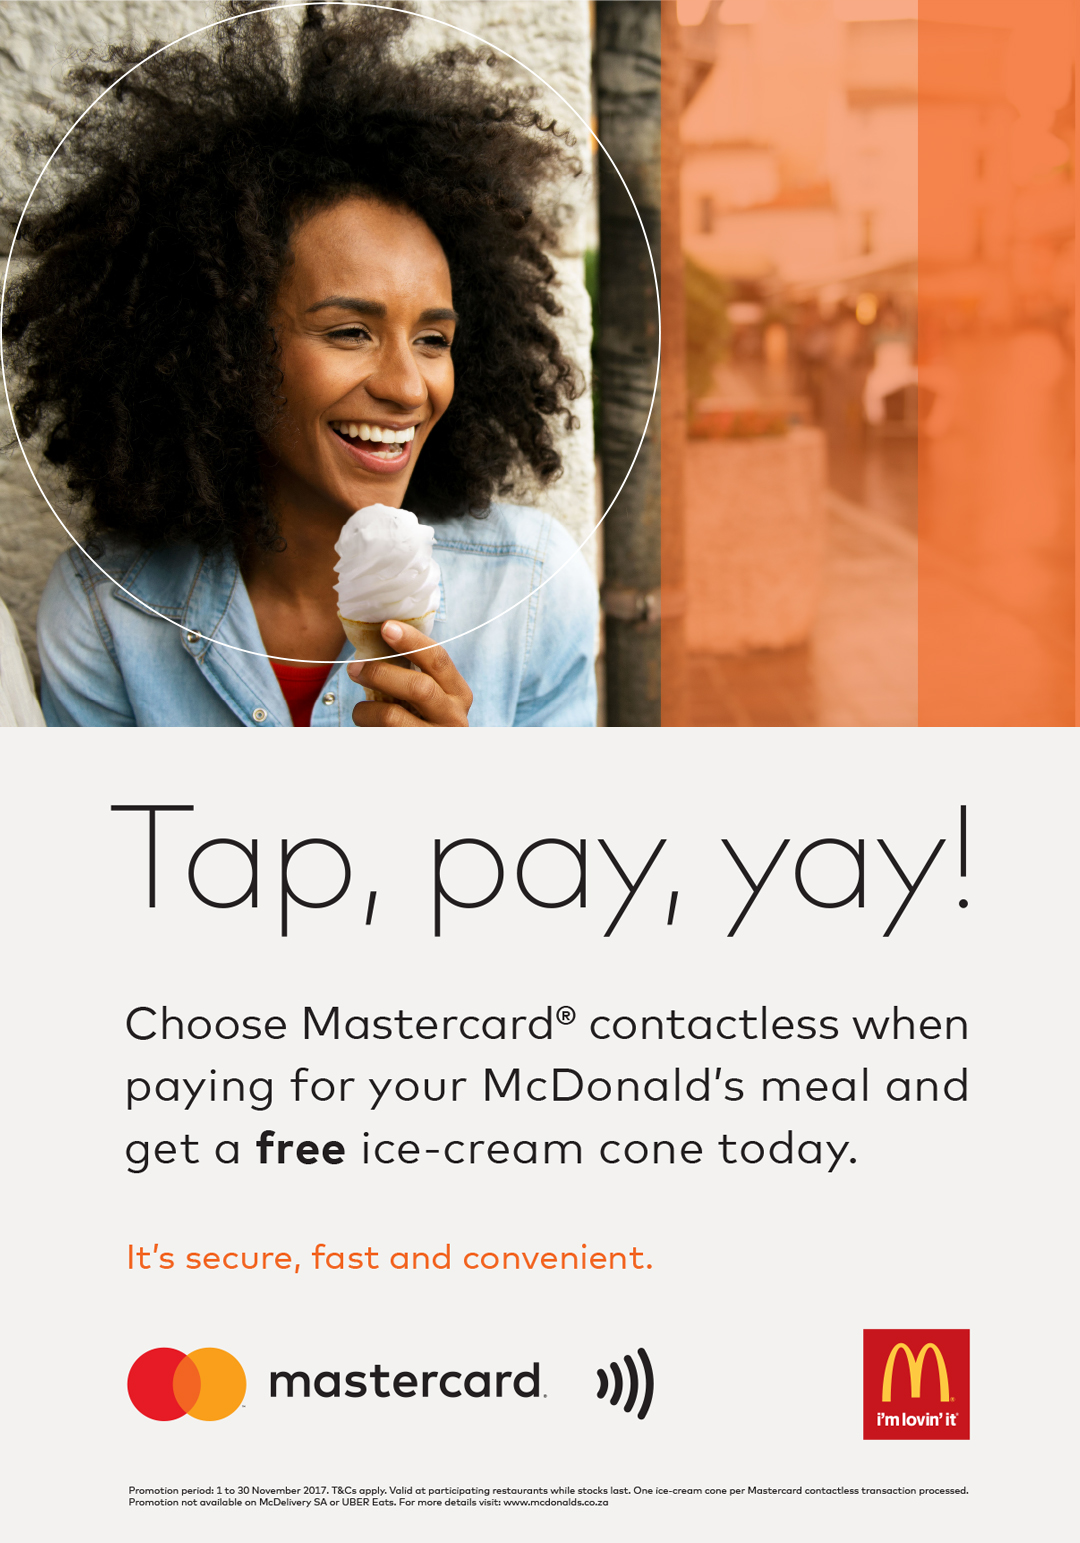 Mastercard McDonald's campaign